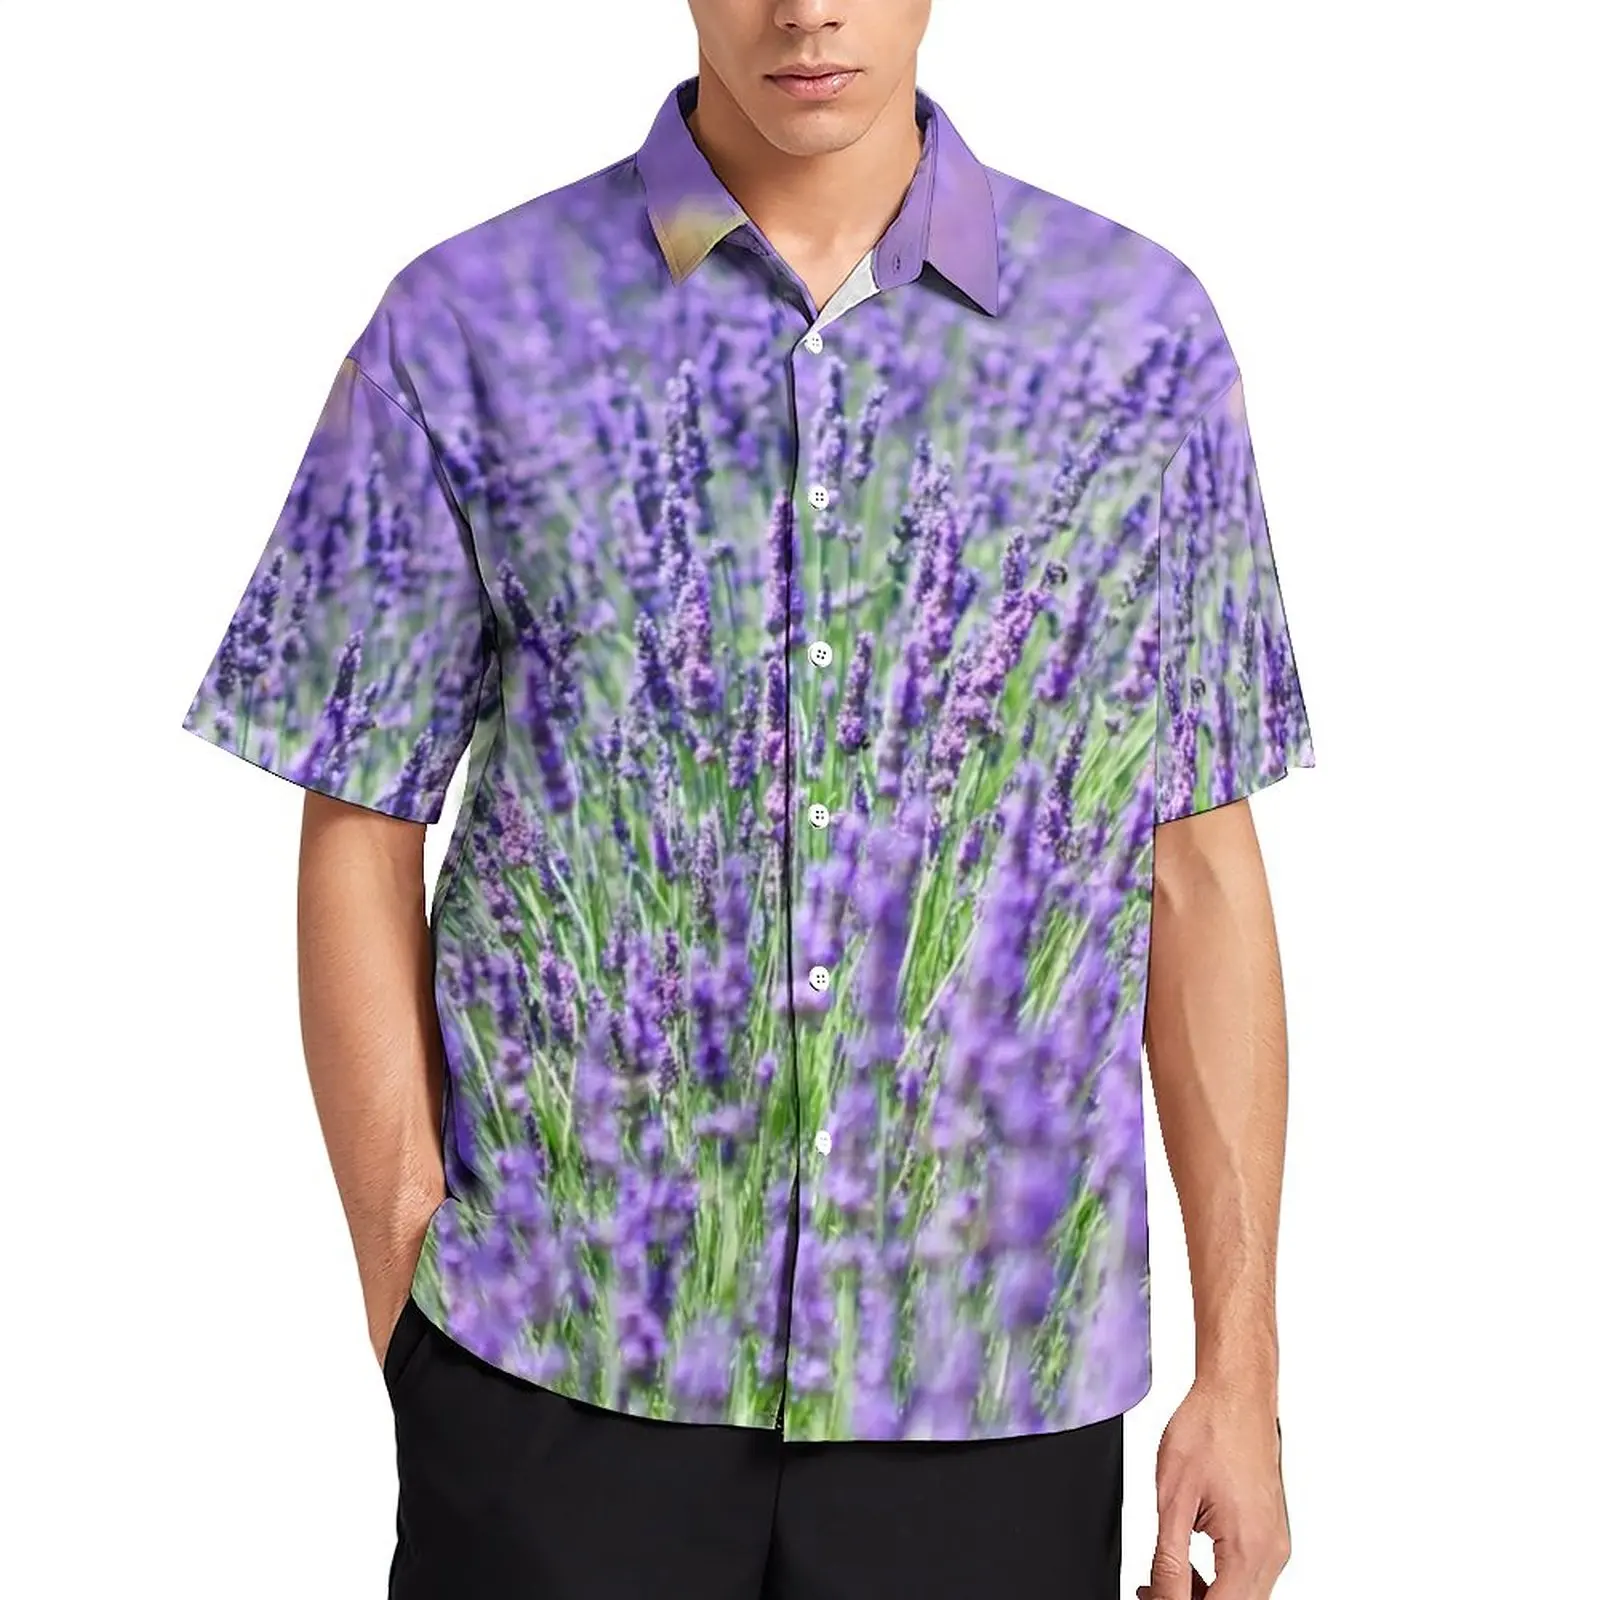 

Lavender Fields Vacation Shirt Garden Flowers Print Hawaiian Casual Shirts Men Cool Blouses Short-Sleeve Tops Big Size 3XL 4XL